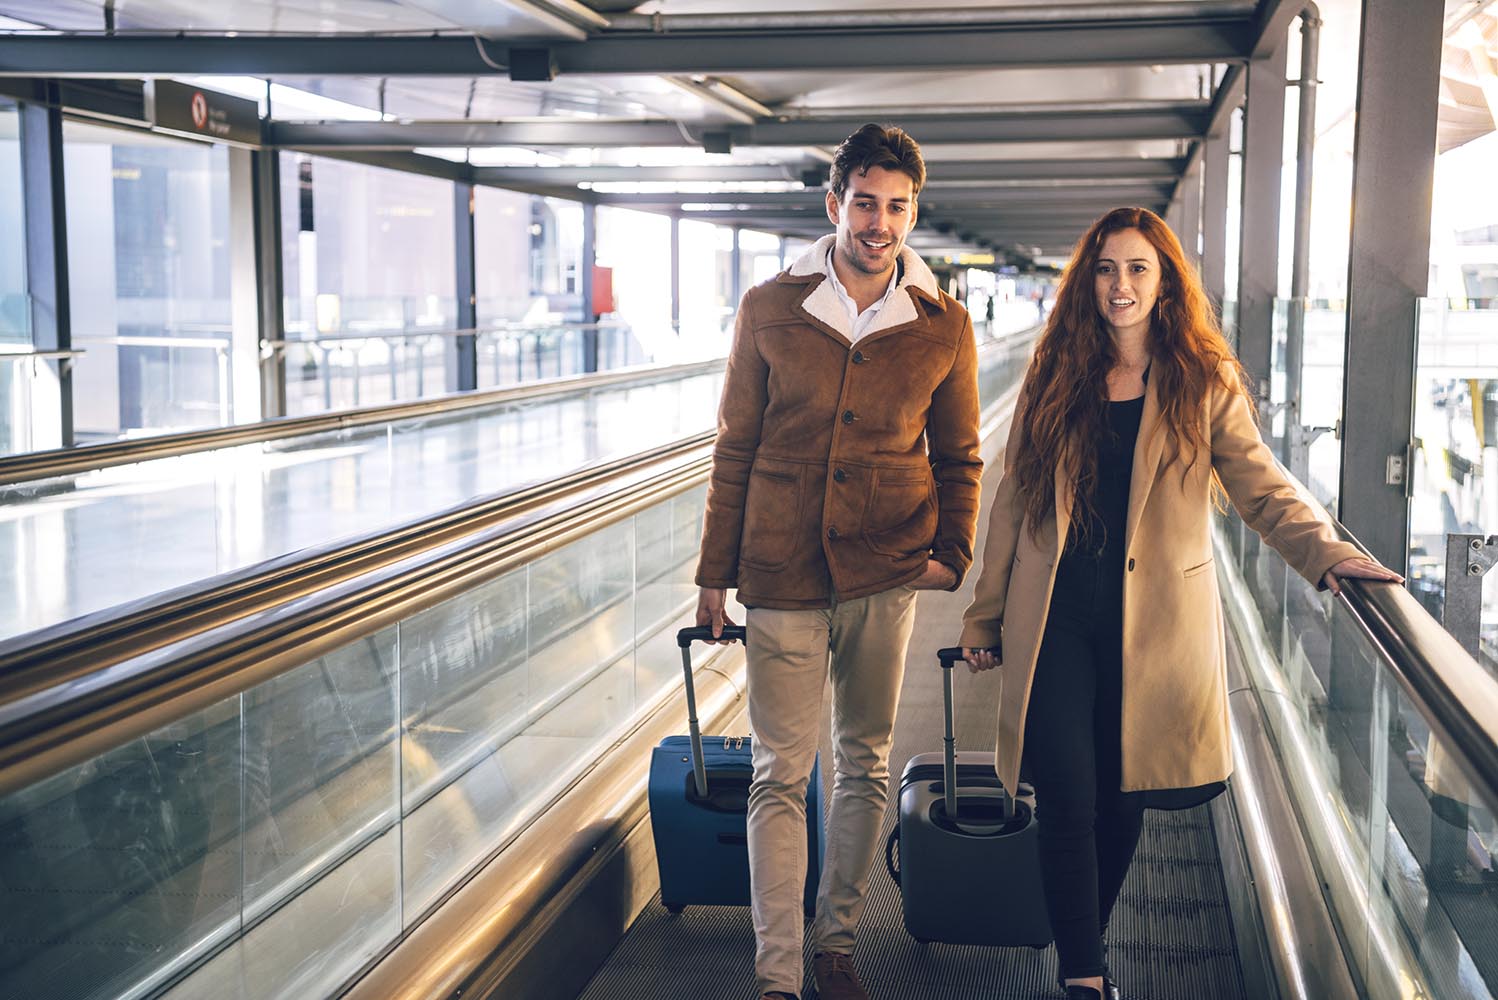 Cheerful couple with luggage on travelator